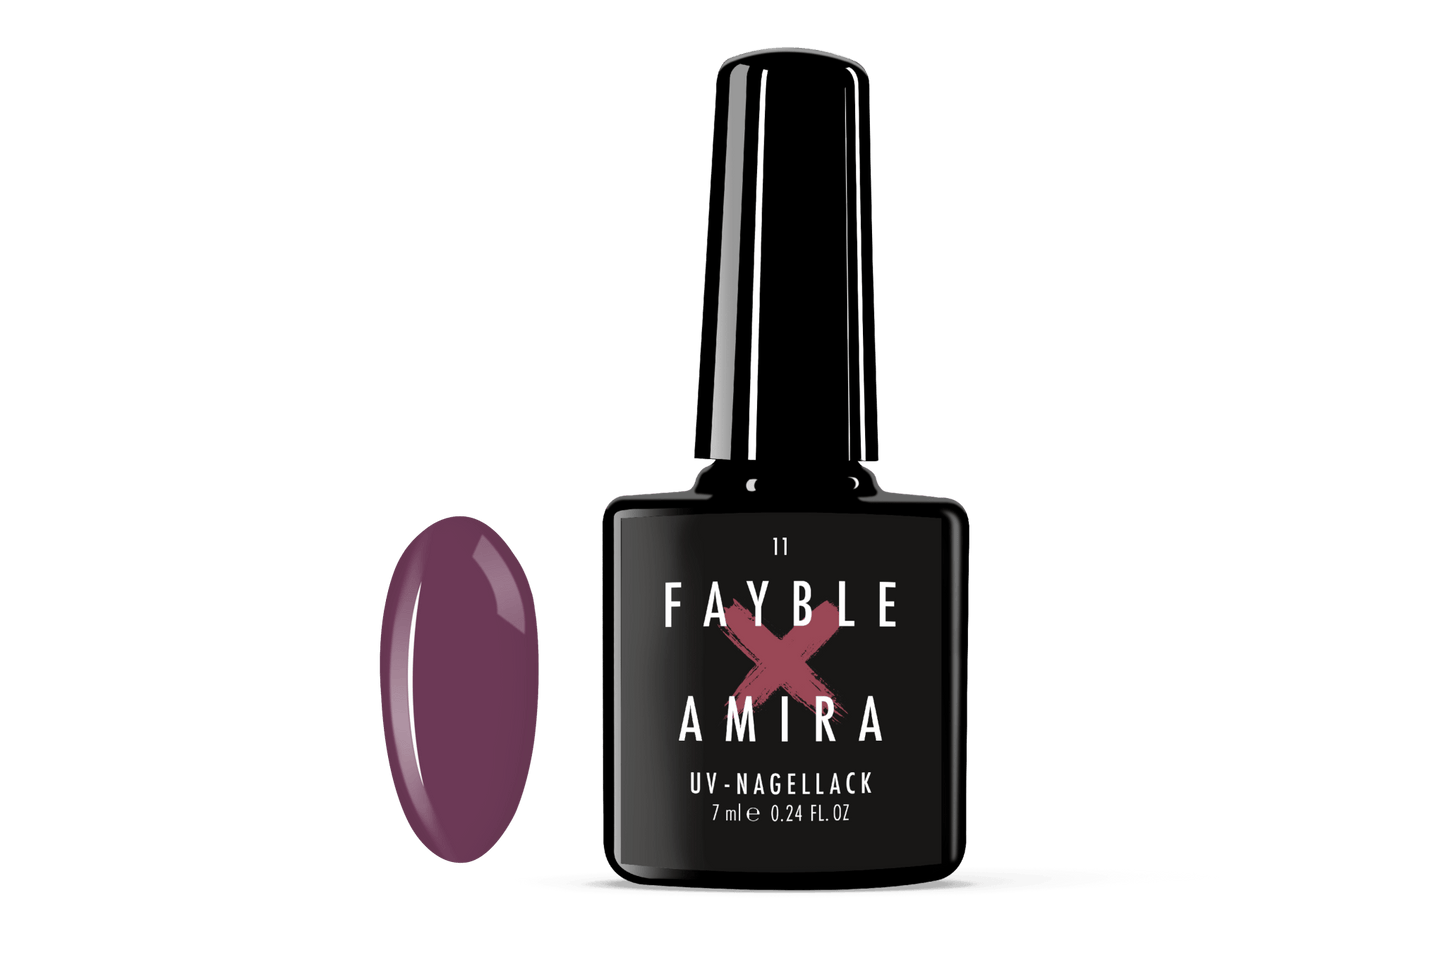 FAYBLE × AMIRA | UV-Nagellack 11 - FAYBLE